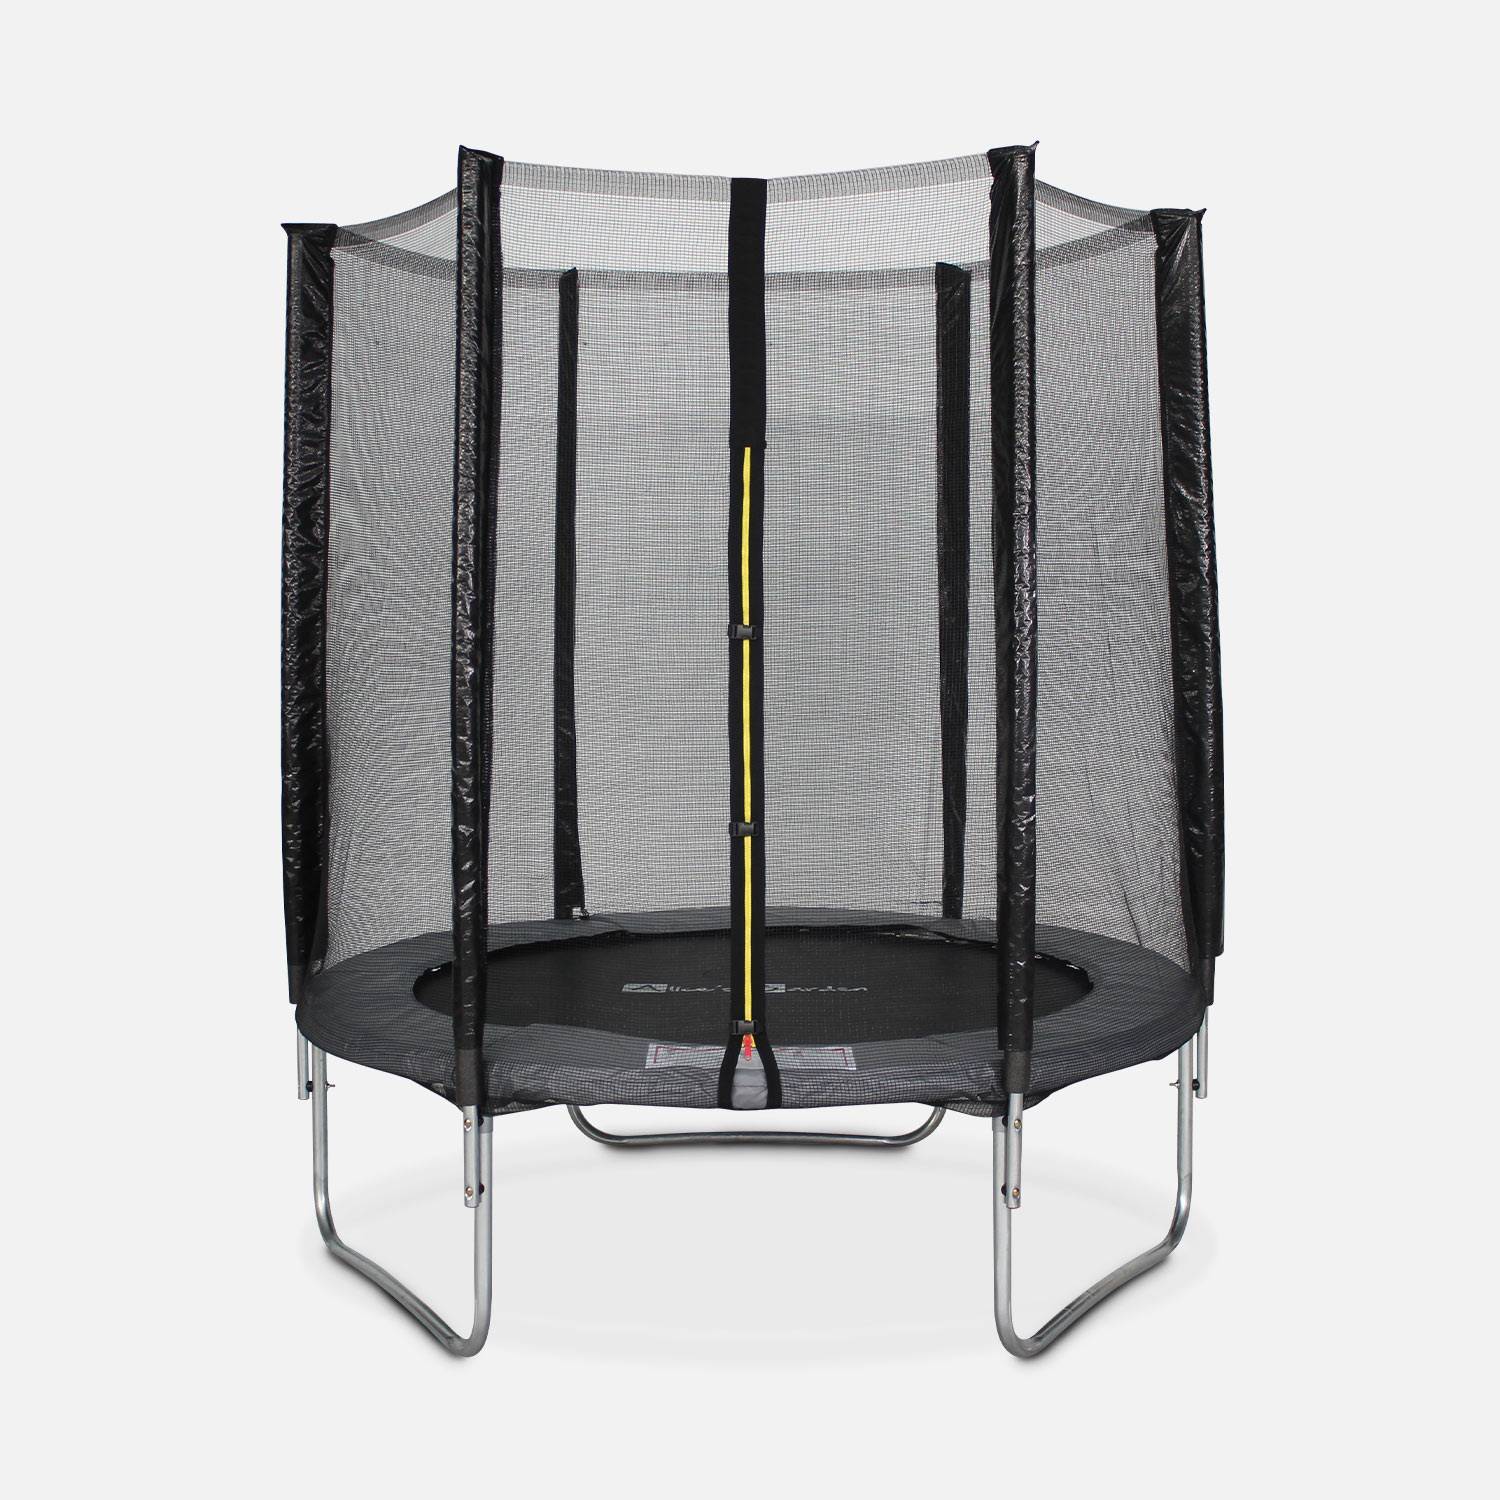 Round trampoline Ø 180cm grey with its protective net - Cassiopée - Garden trampoline 2m| PRO quality | EU standards. Photo1